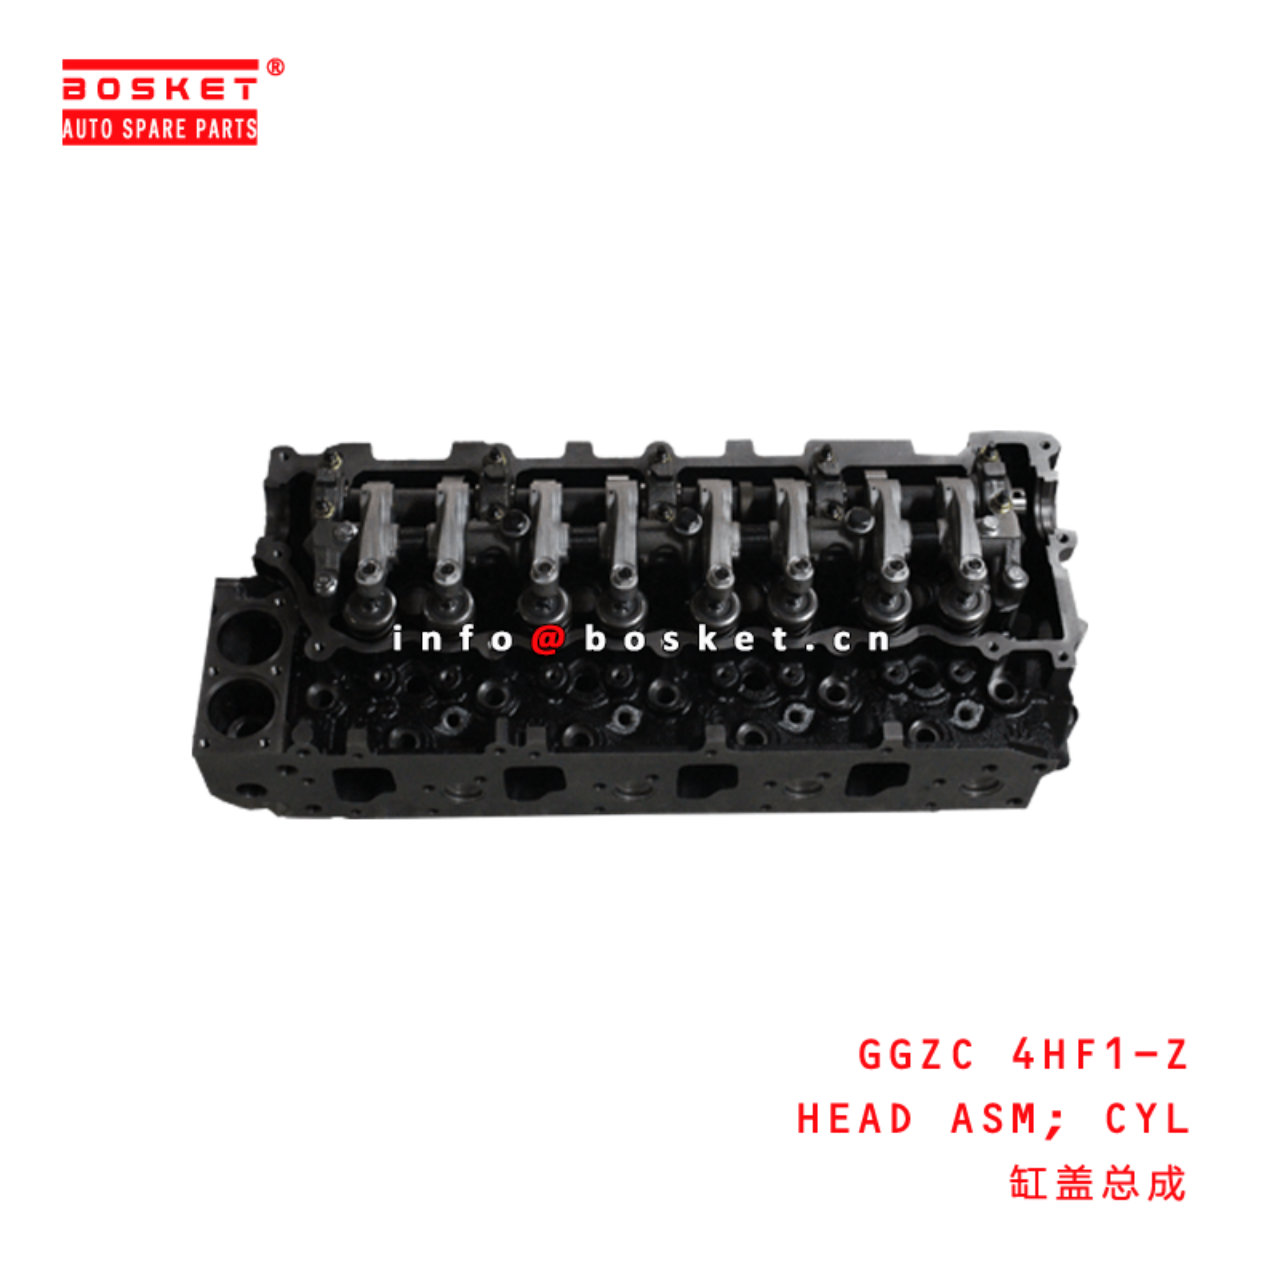 GGZC 4HF1-Z Cylinder Head Assembly GGZC 4HF1Z Suitable for ISUZU 4HF1 